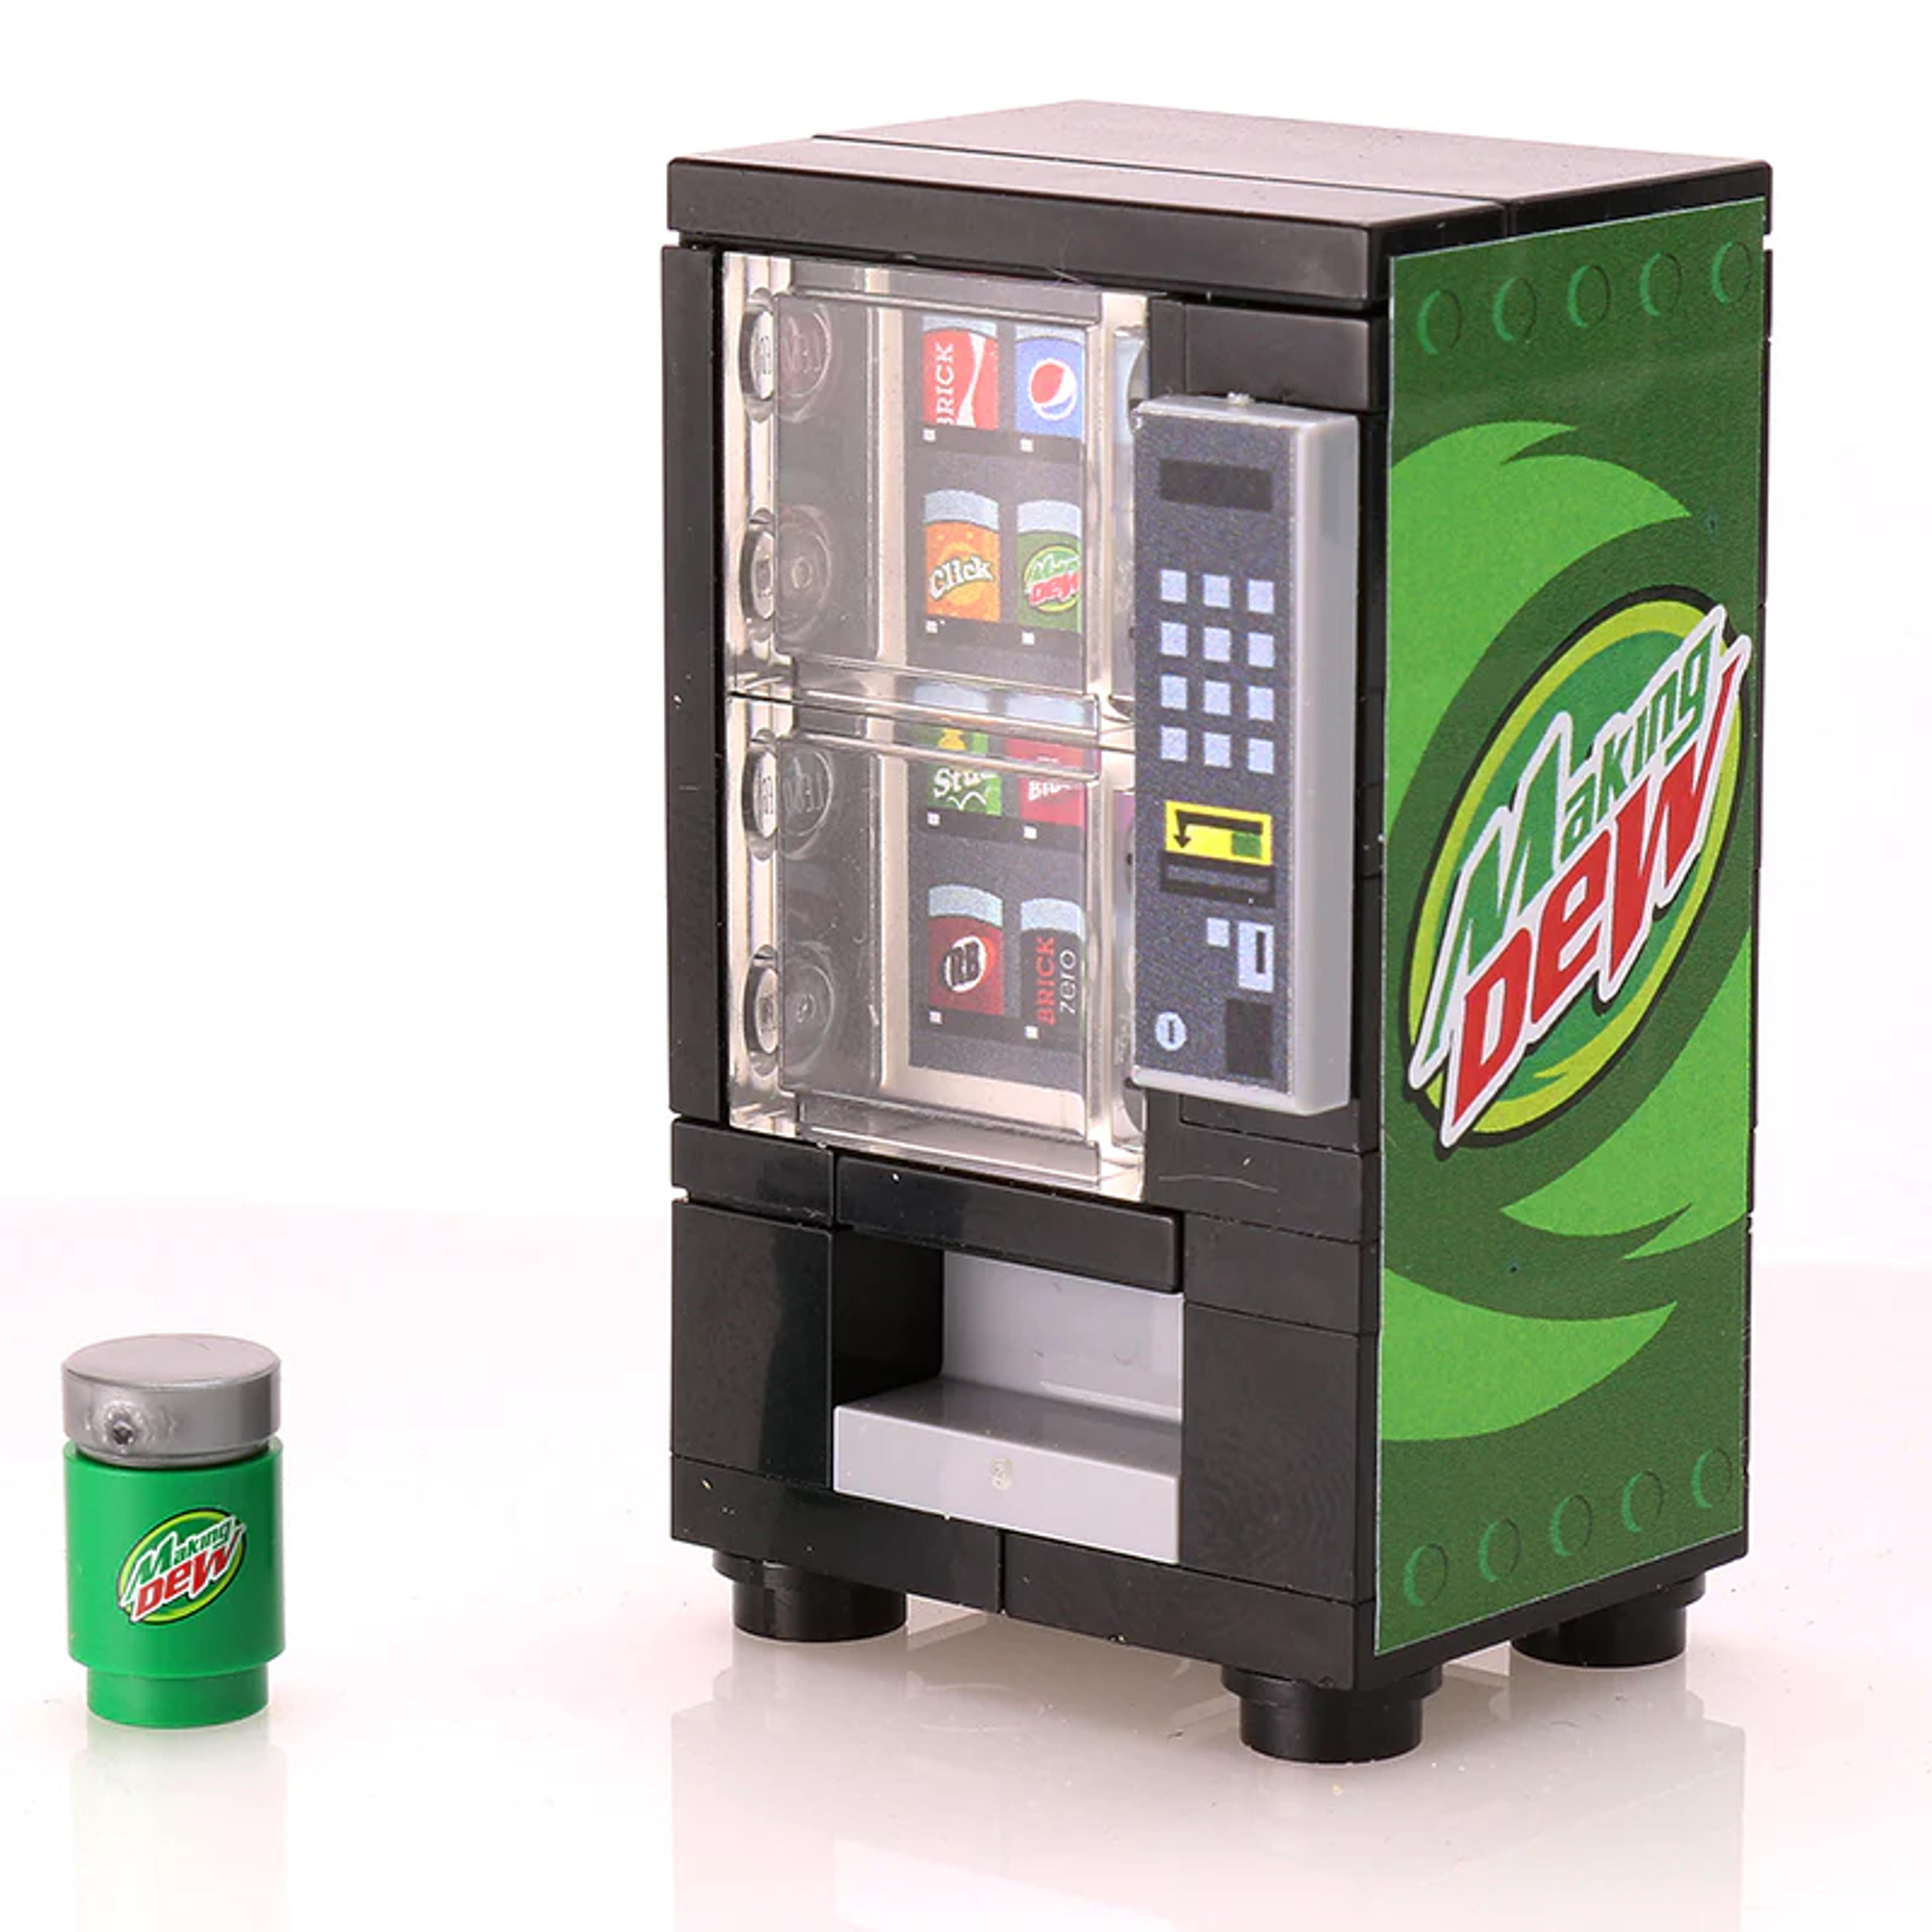 Making Dew - Custom Soda Vending Machine made with LEGO Bricks